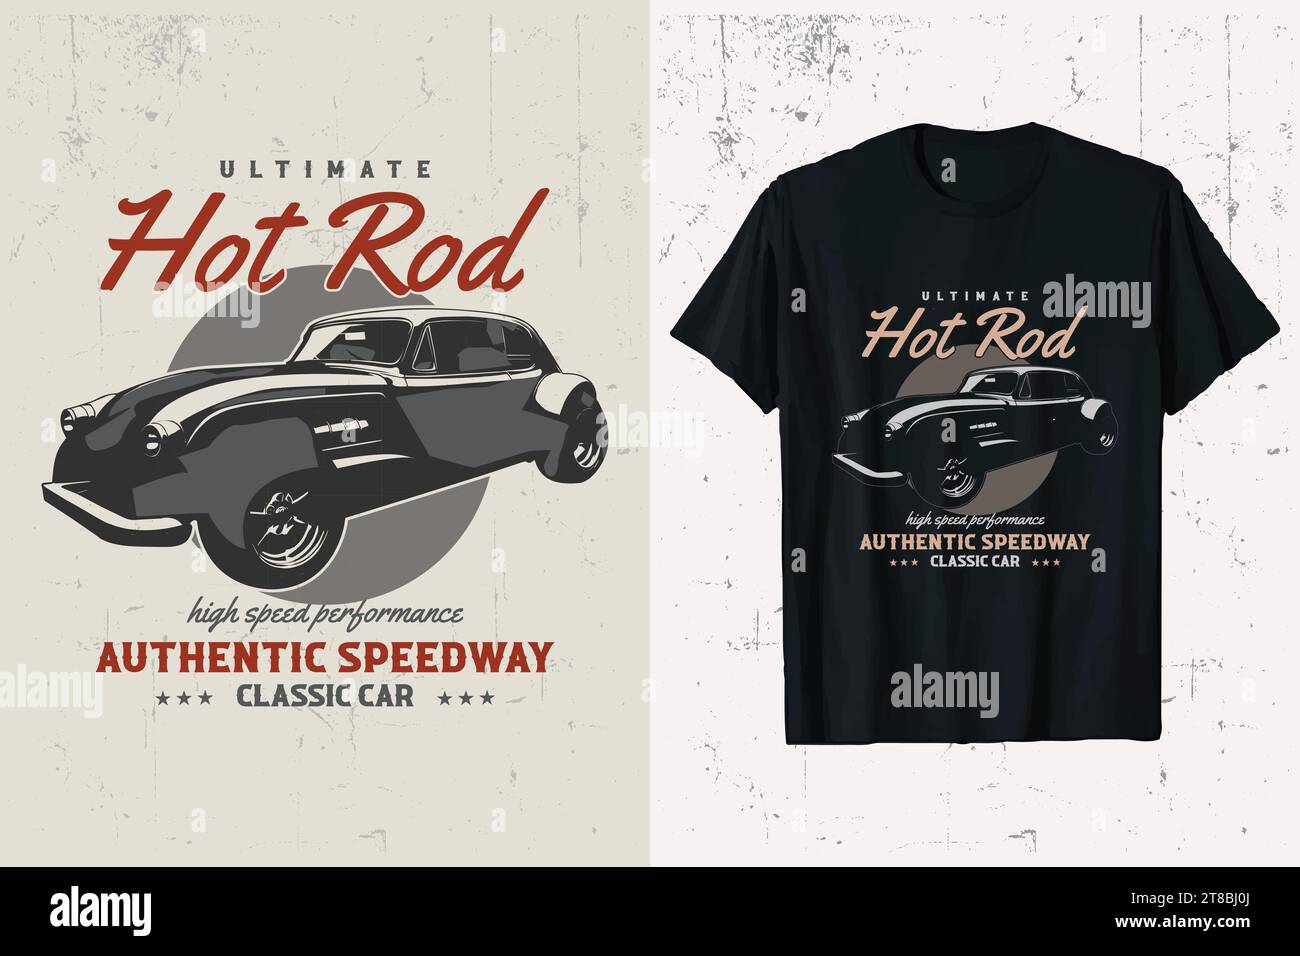 Ultimate Hotrod High-Speed Performance Car Vector T-shirt Design. vintage hotrod classic car t-shirt graphic. american hot rod old cars custom tee. Stock Vector